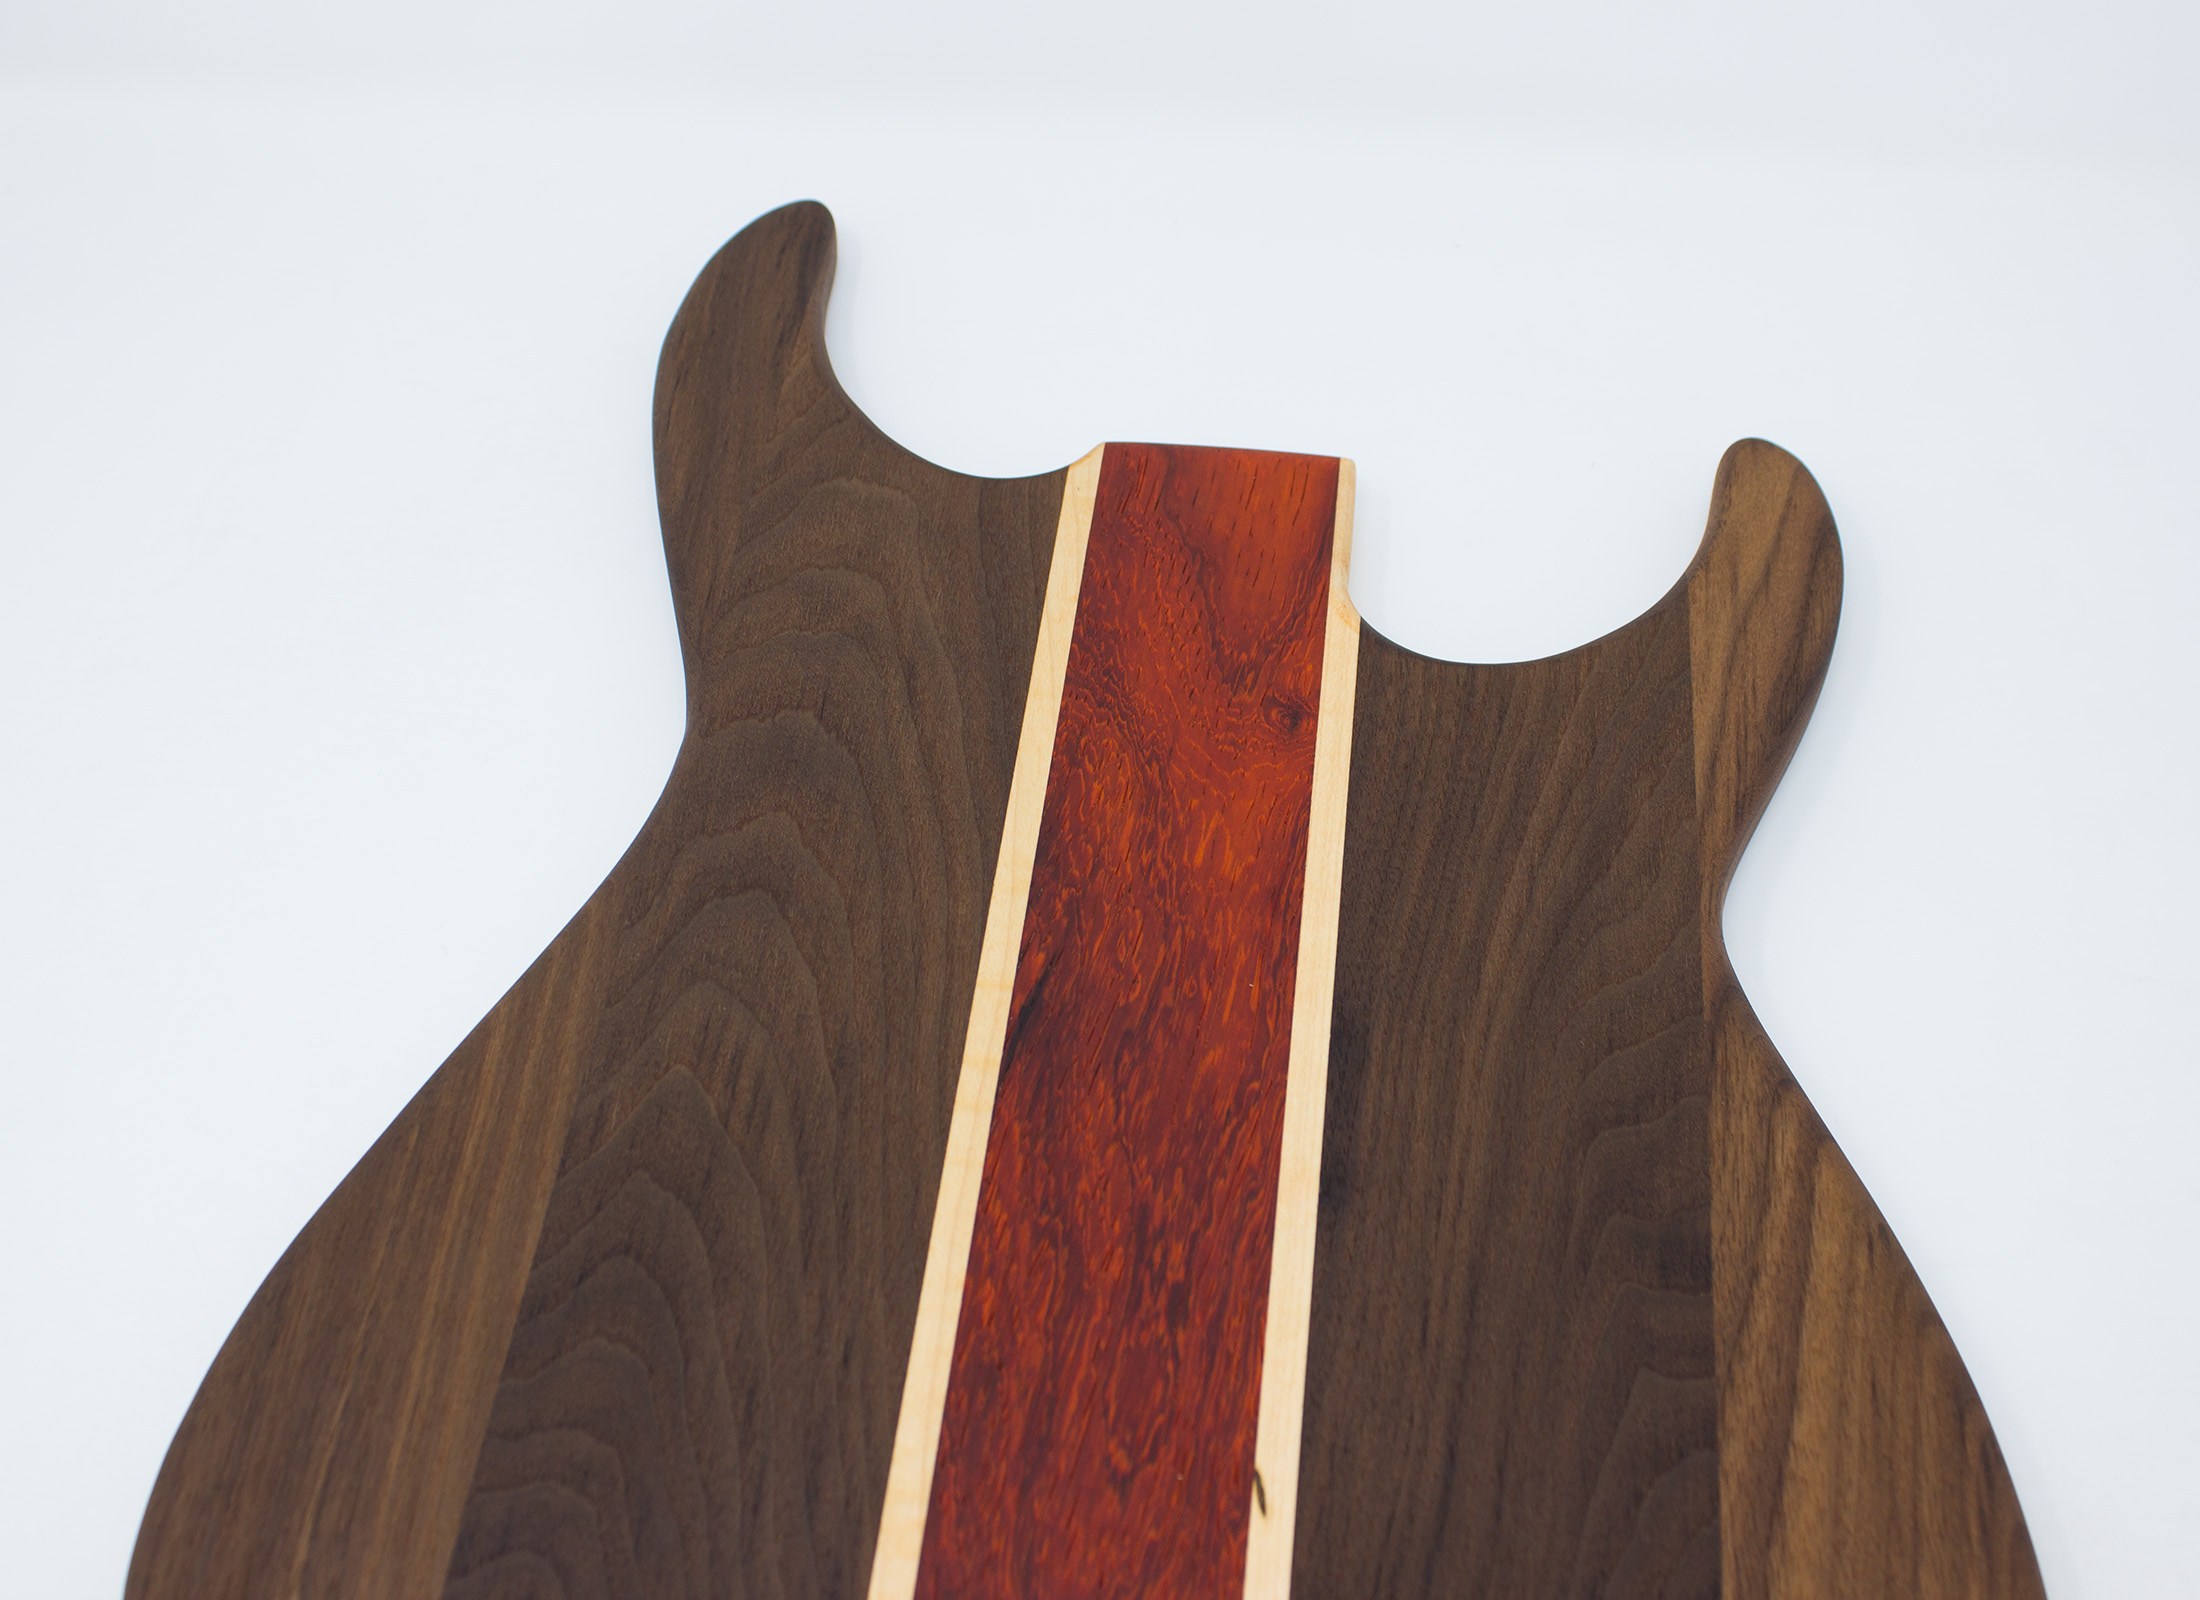 Cheap Trick Guitar End Grain Cutting Board - Walnut and Maple